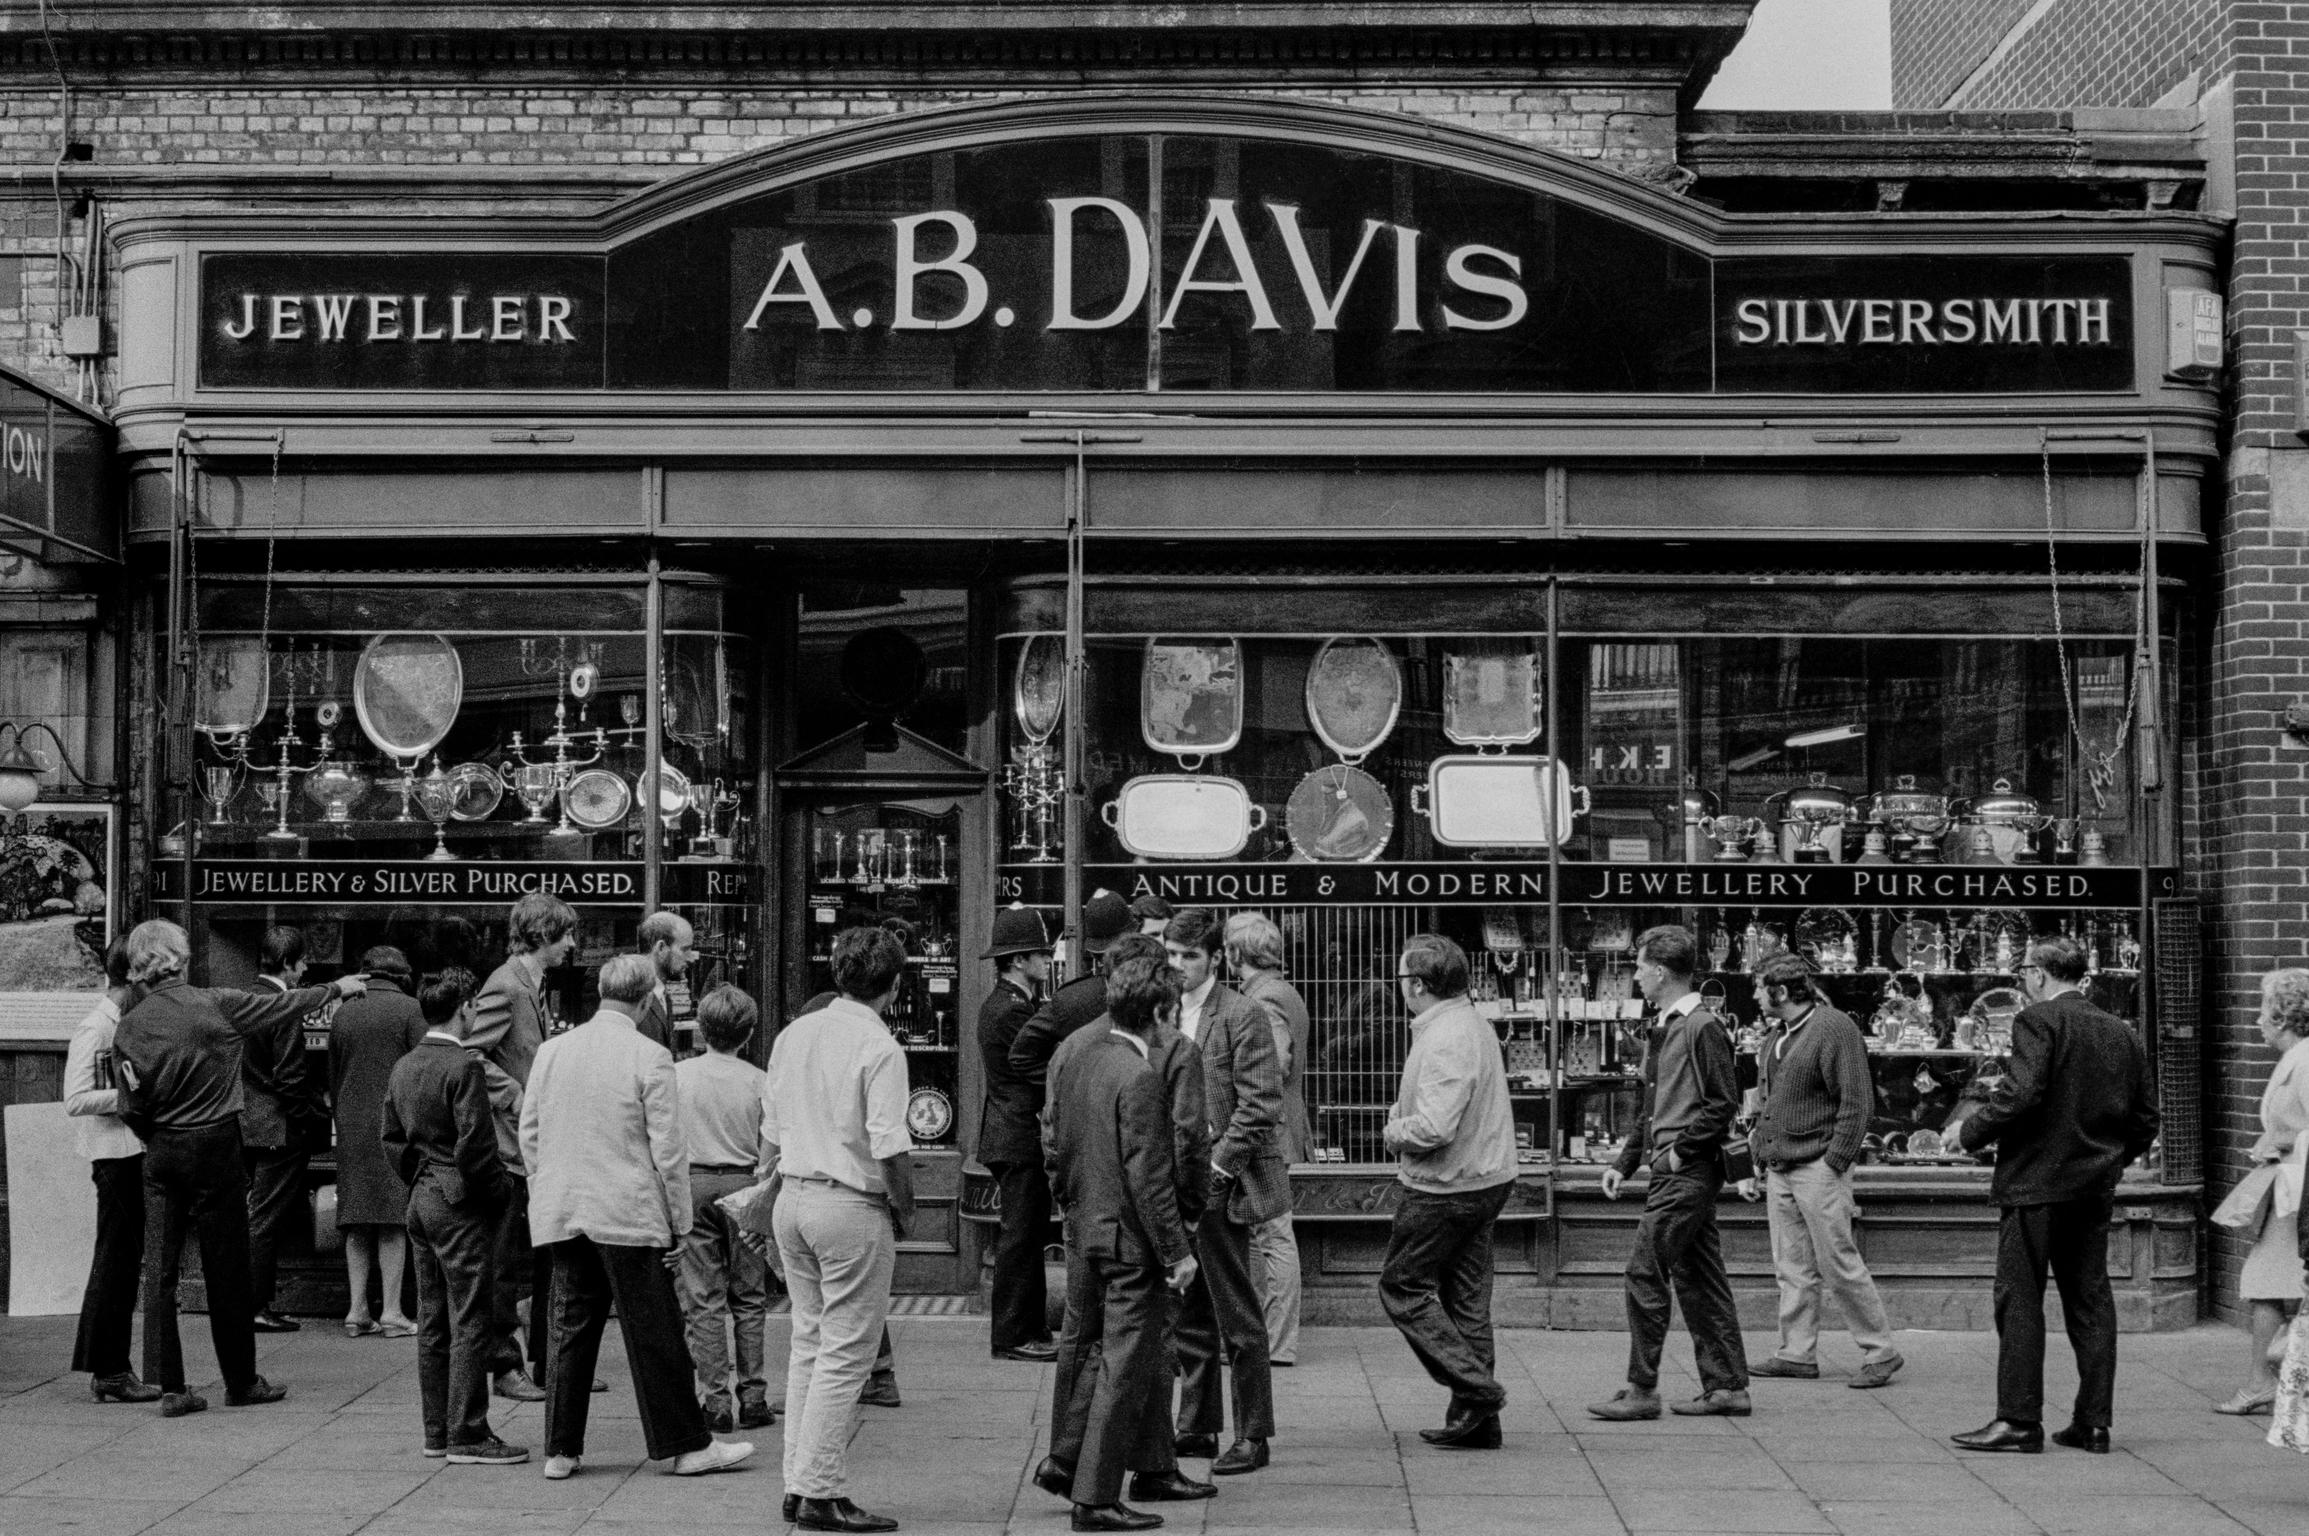 Smash and grab raid on A.B. David Jeweller & Silversmith. Queensway. London, UK